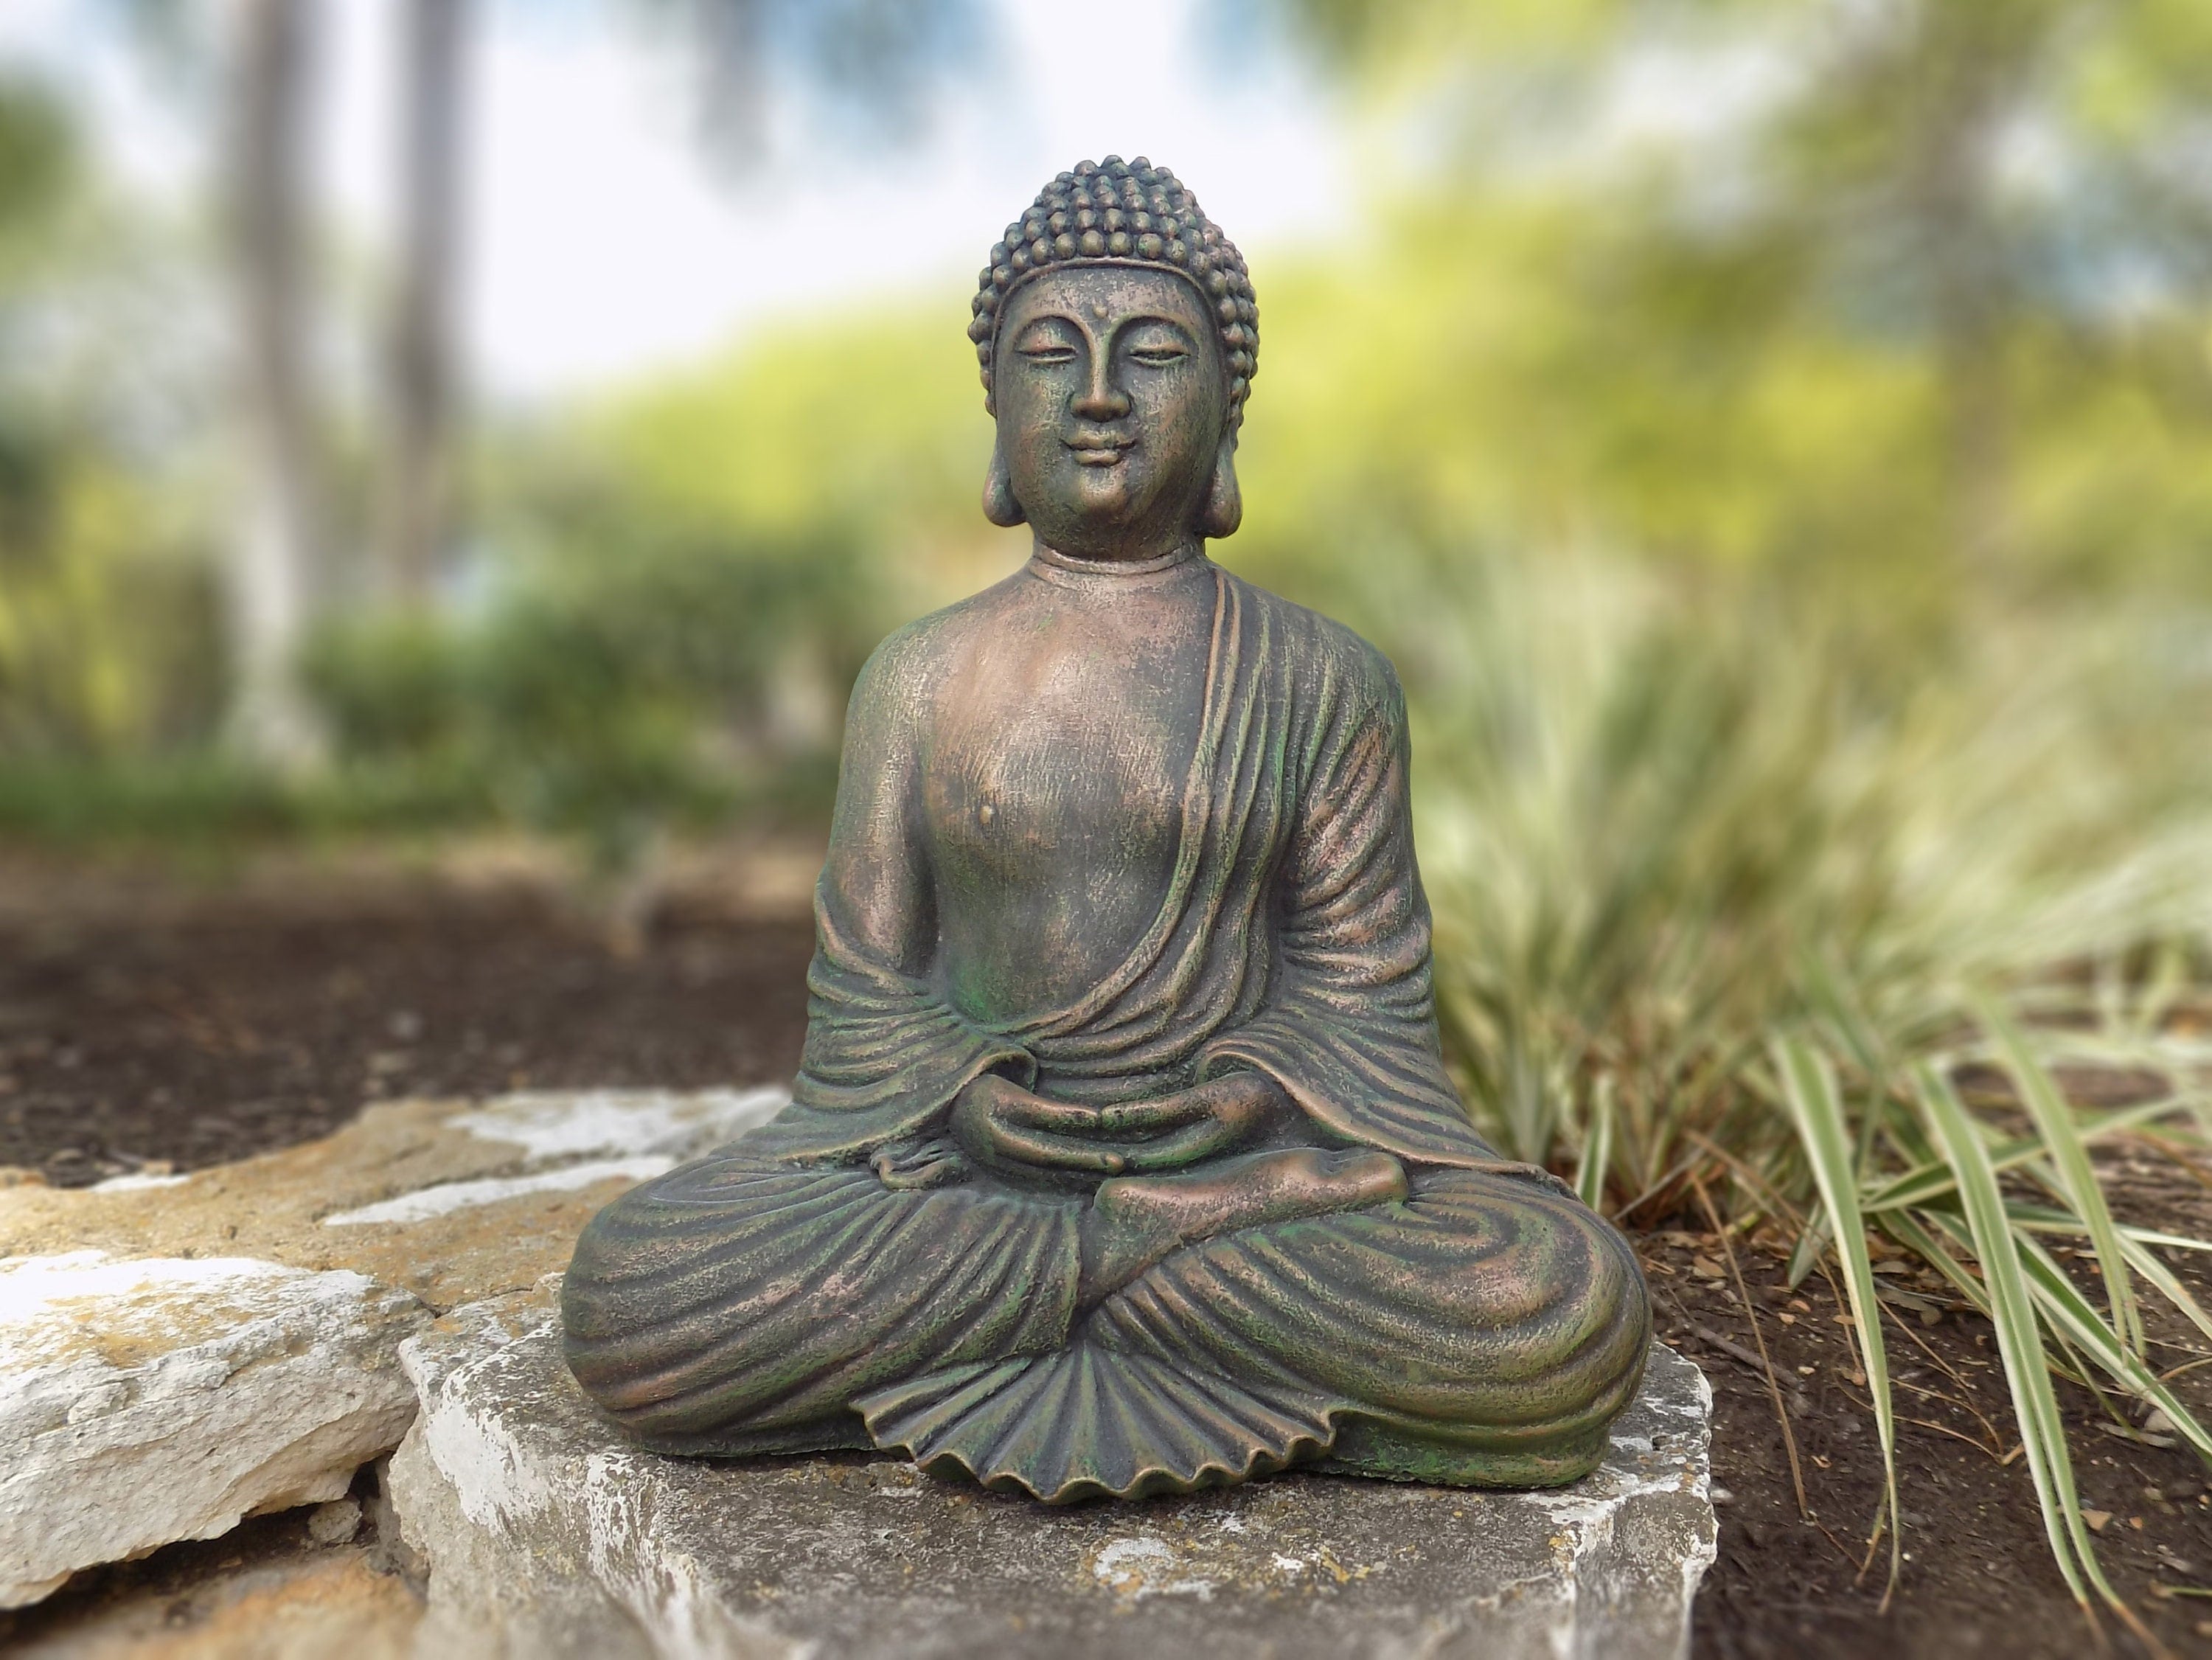 Meditation Buddha Concrete Statue Copper Style Home or Garden Decor,  Buddhism, Garden Buddha, Cement Buddha, Concrete Buddha, Zen Garden - Etsy